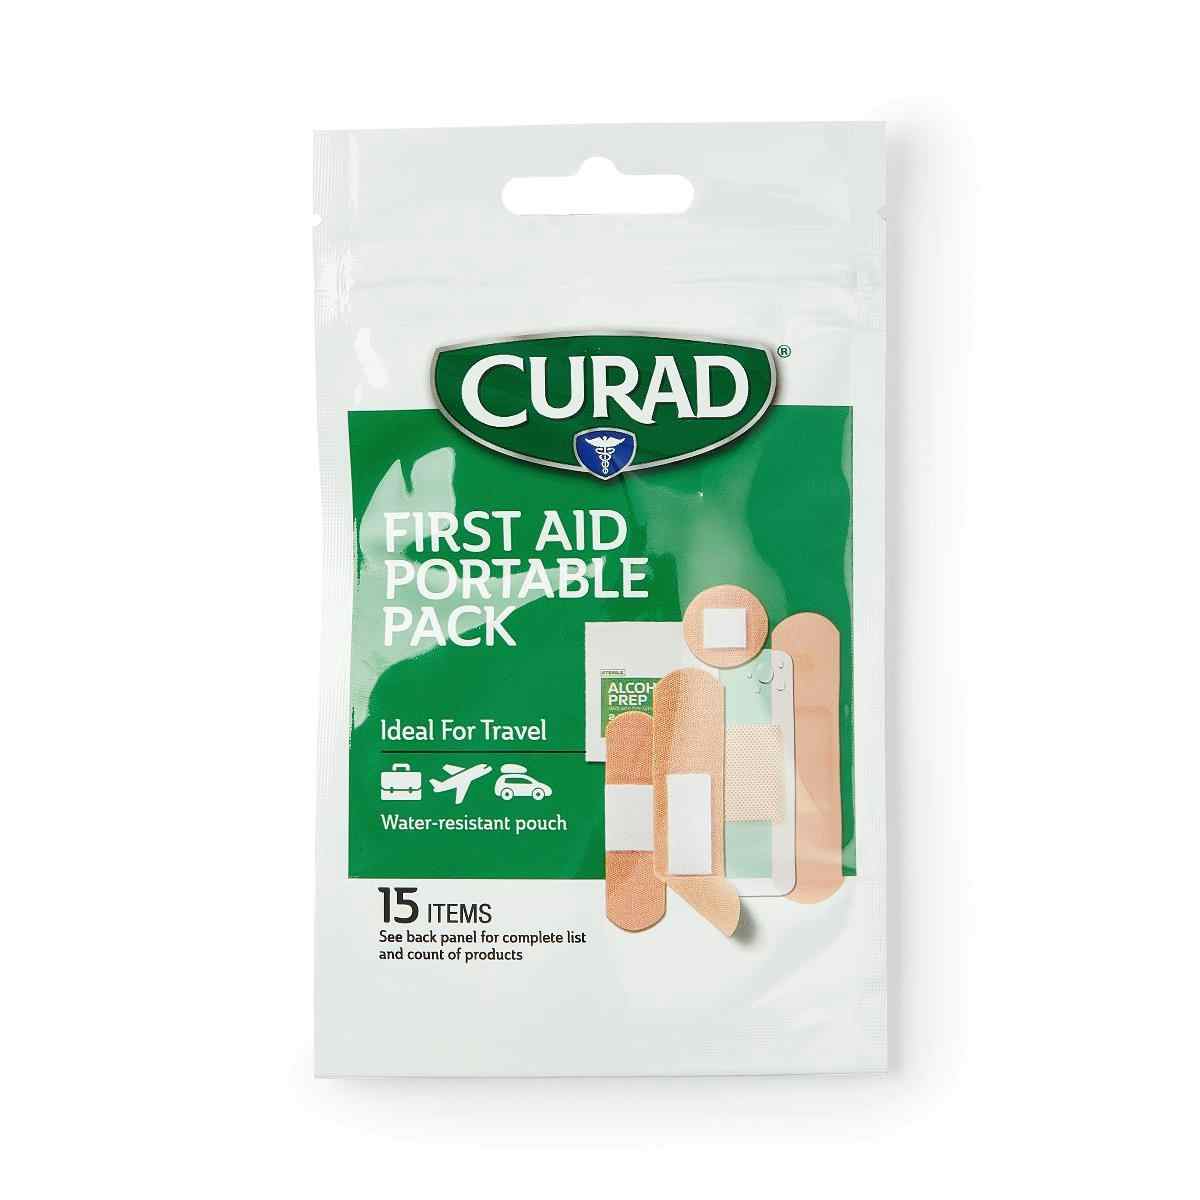 Curad First Aid Portable Packs, CURFAK01, Case of 48